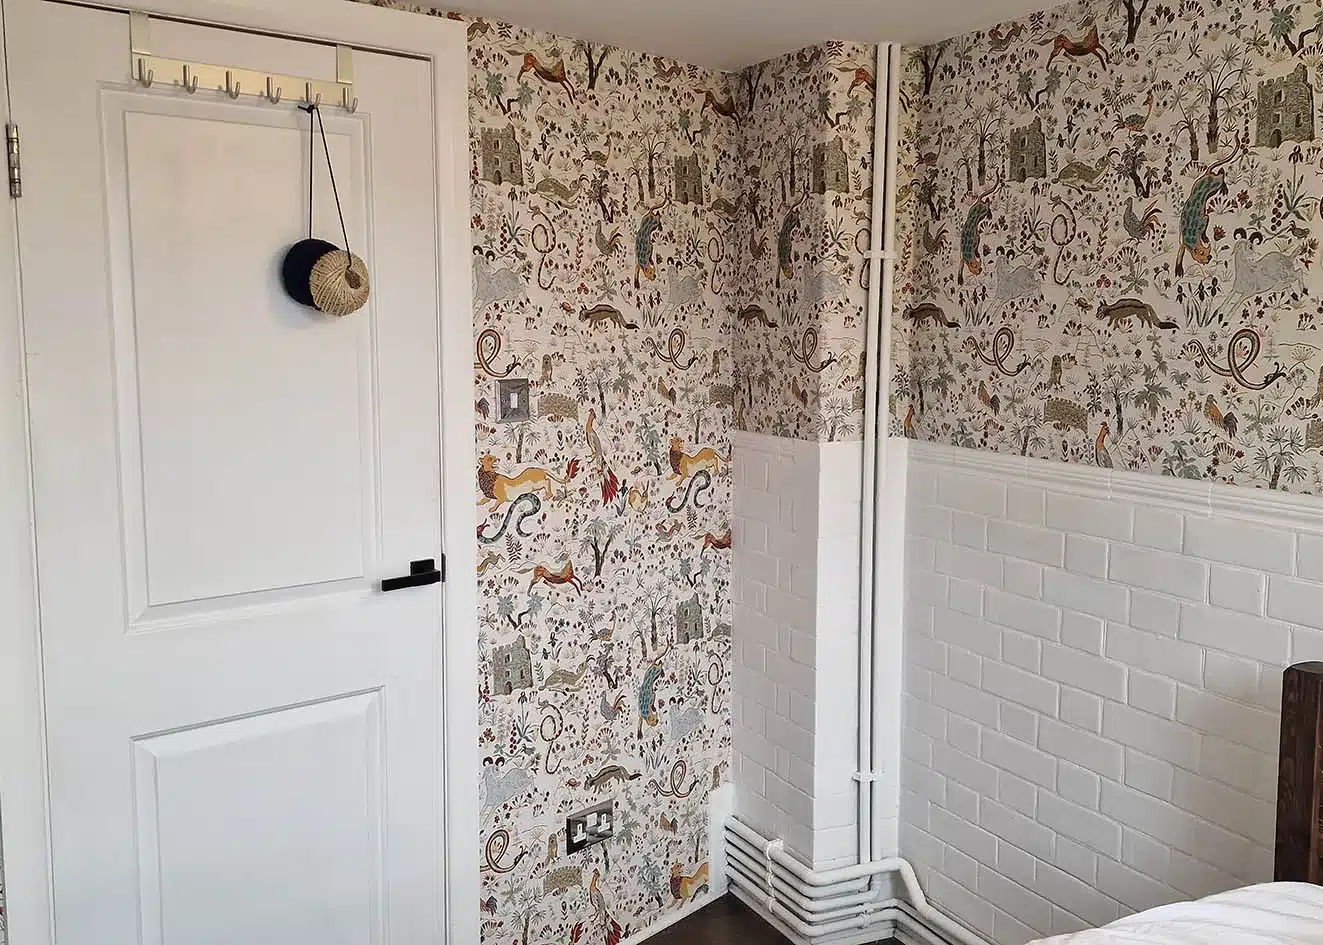 House of Hackney designers wallpaper installation in a bedroom.